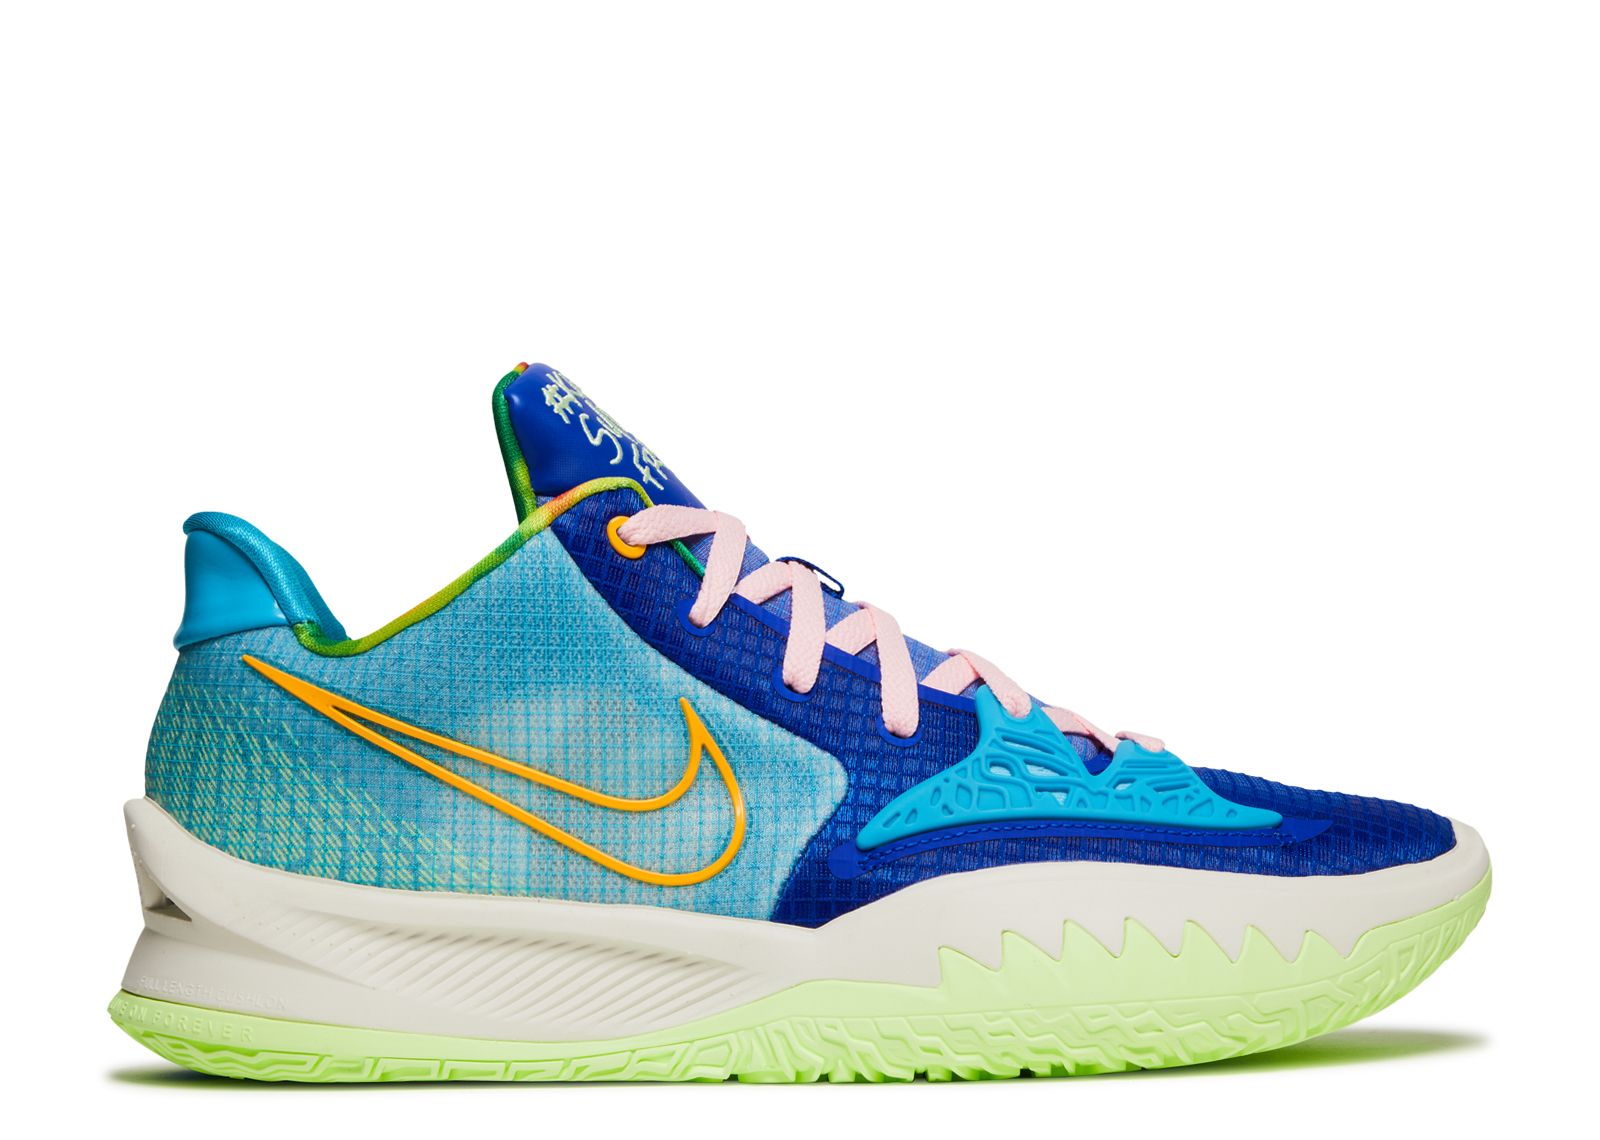 Nike Sue Bird x Kyrie Low 4 “Dynasty” Men's Basketball Shoes